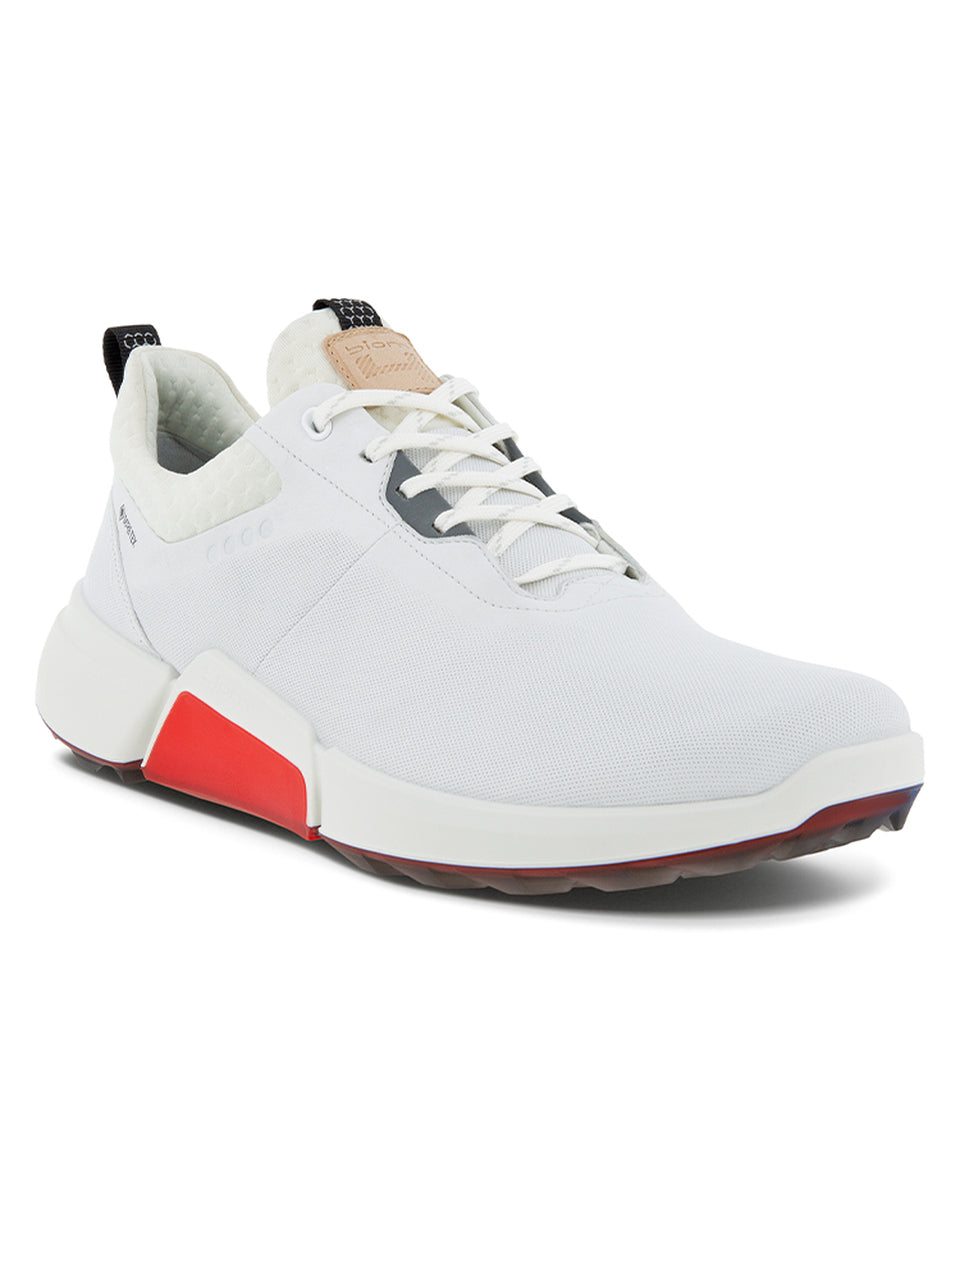 Ecco Mens BIOM Hybrid 4 Golf Shoes- White